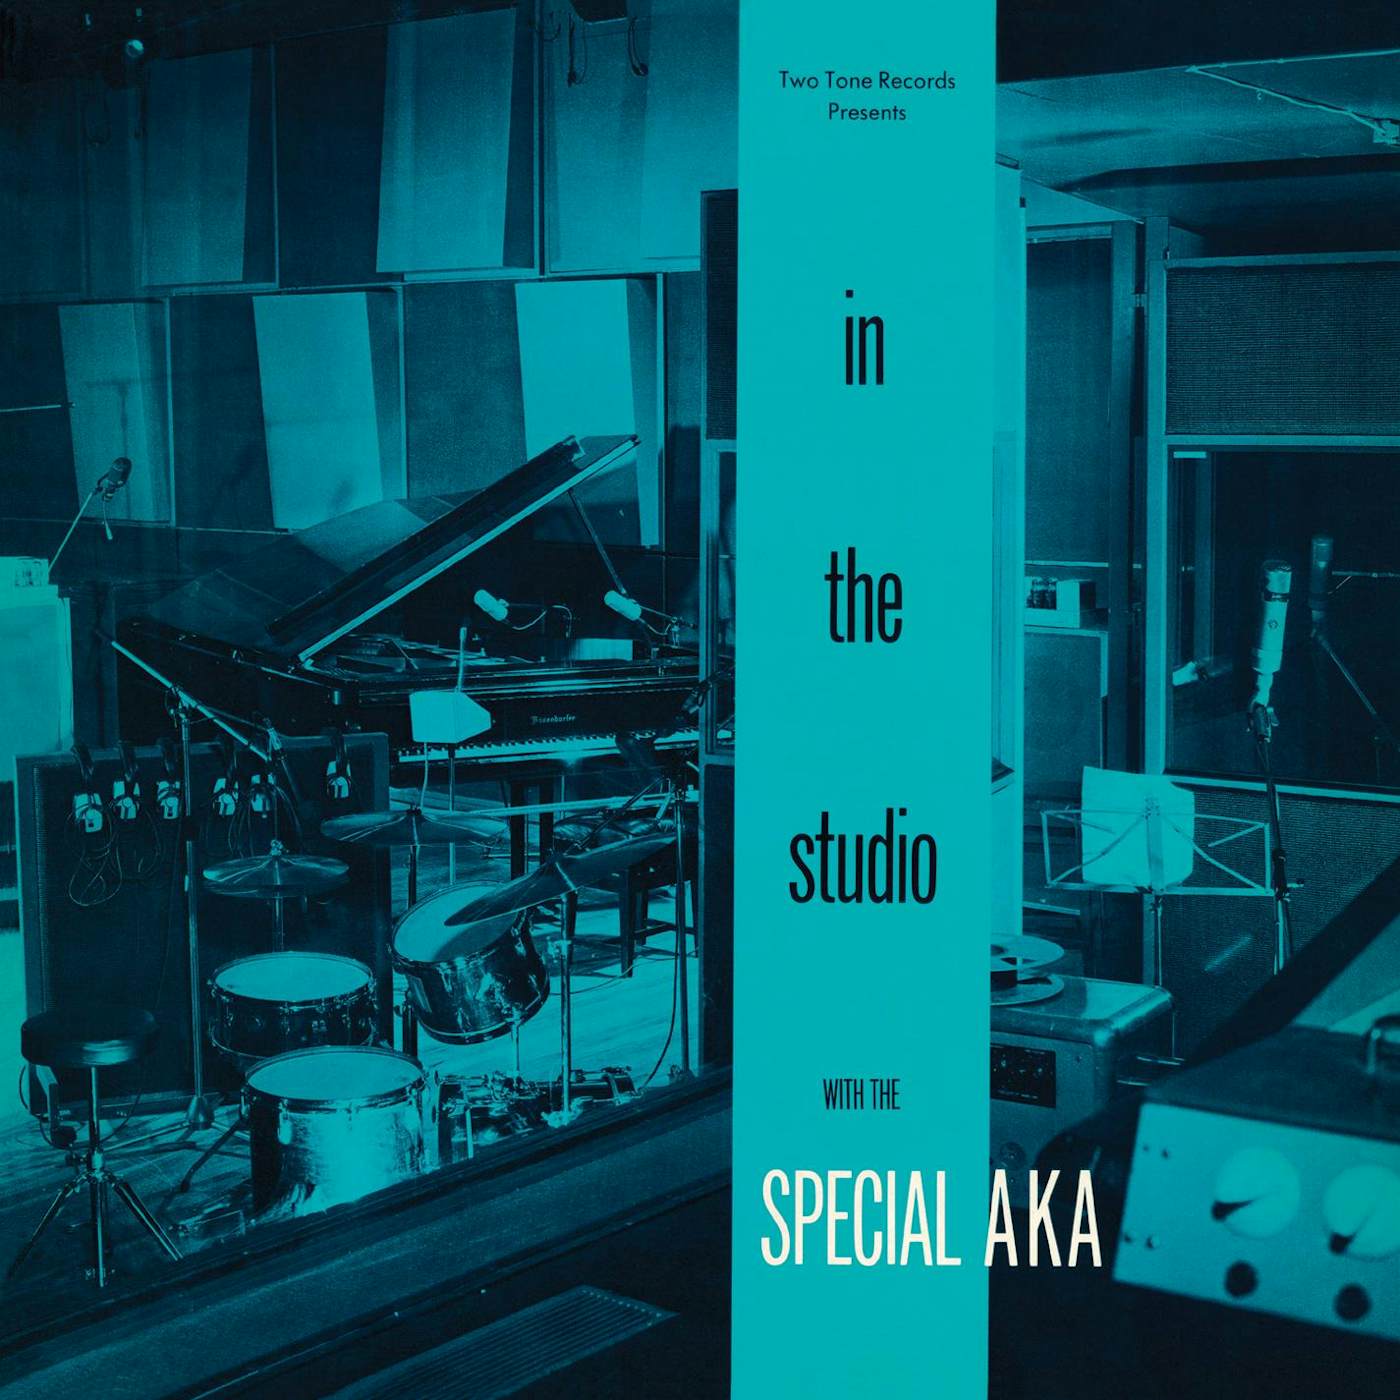 The Specials In The Studio Vinyl Record